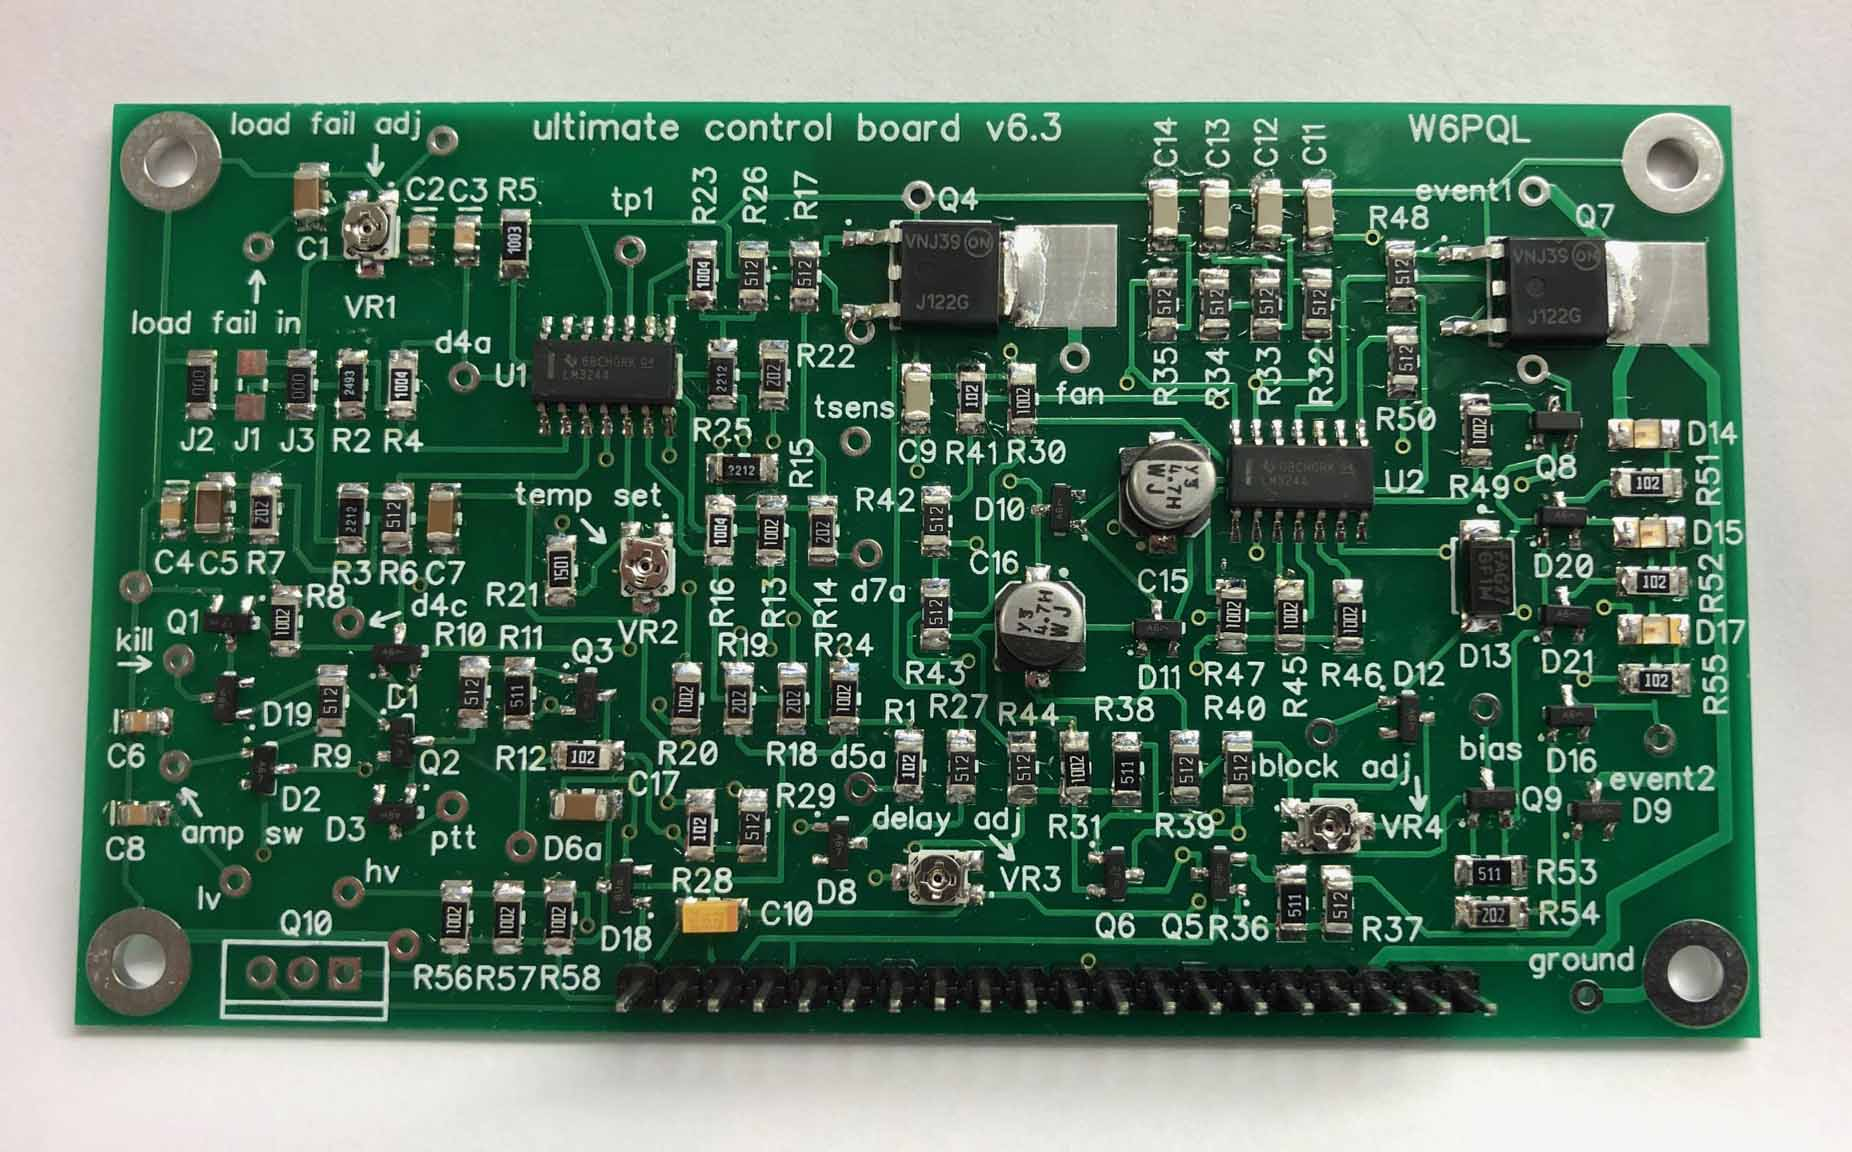 W6PQL Ultimate Amlifier Control Board v6.3